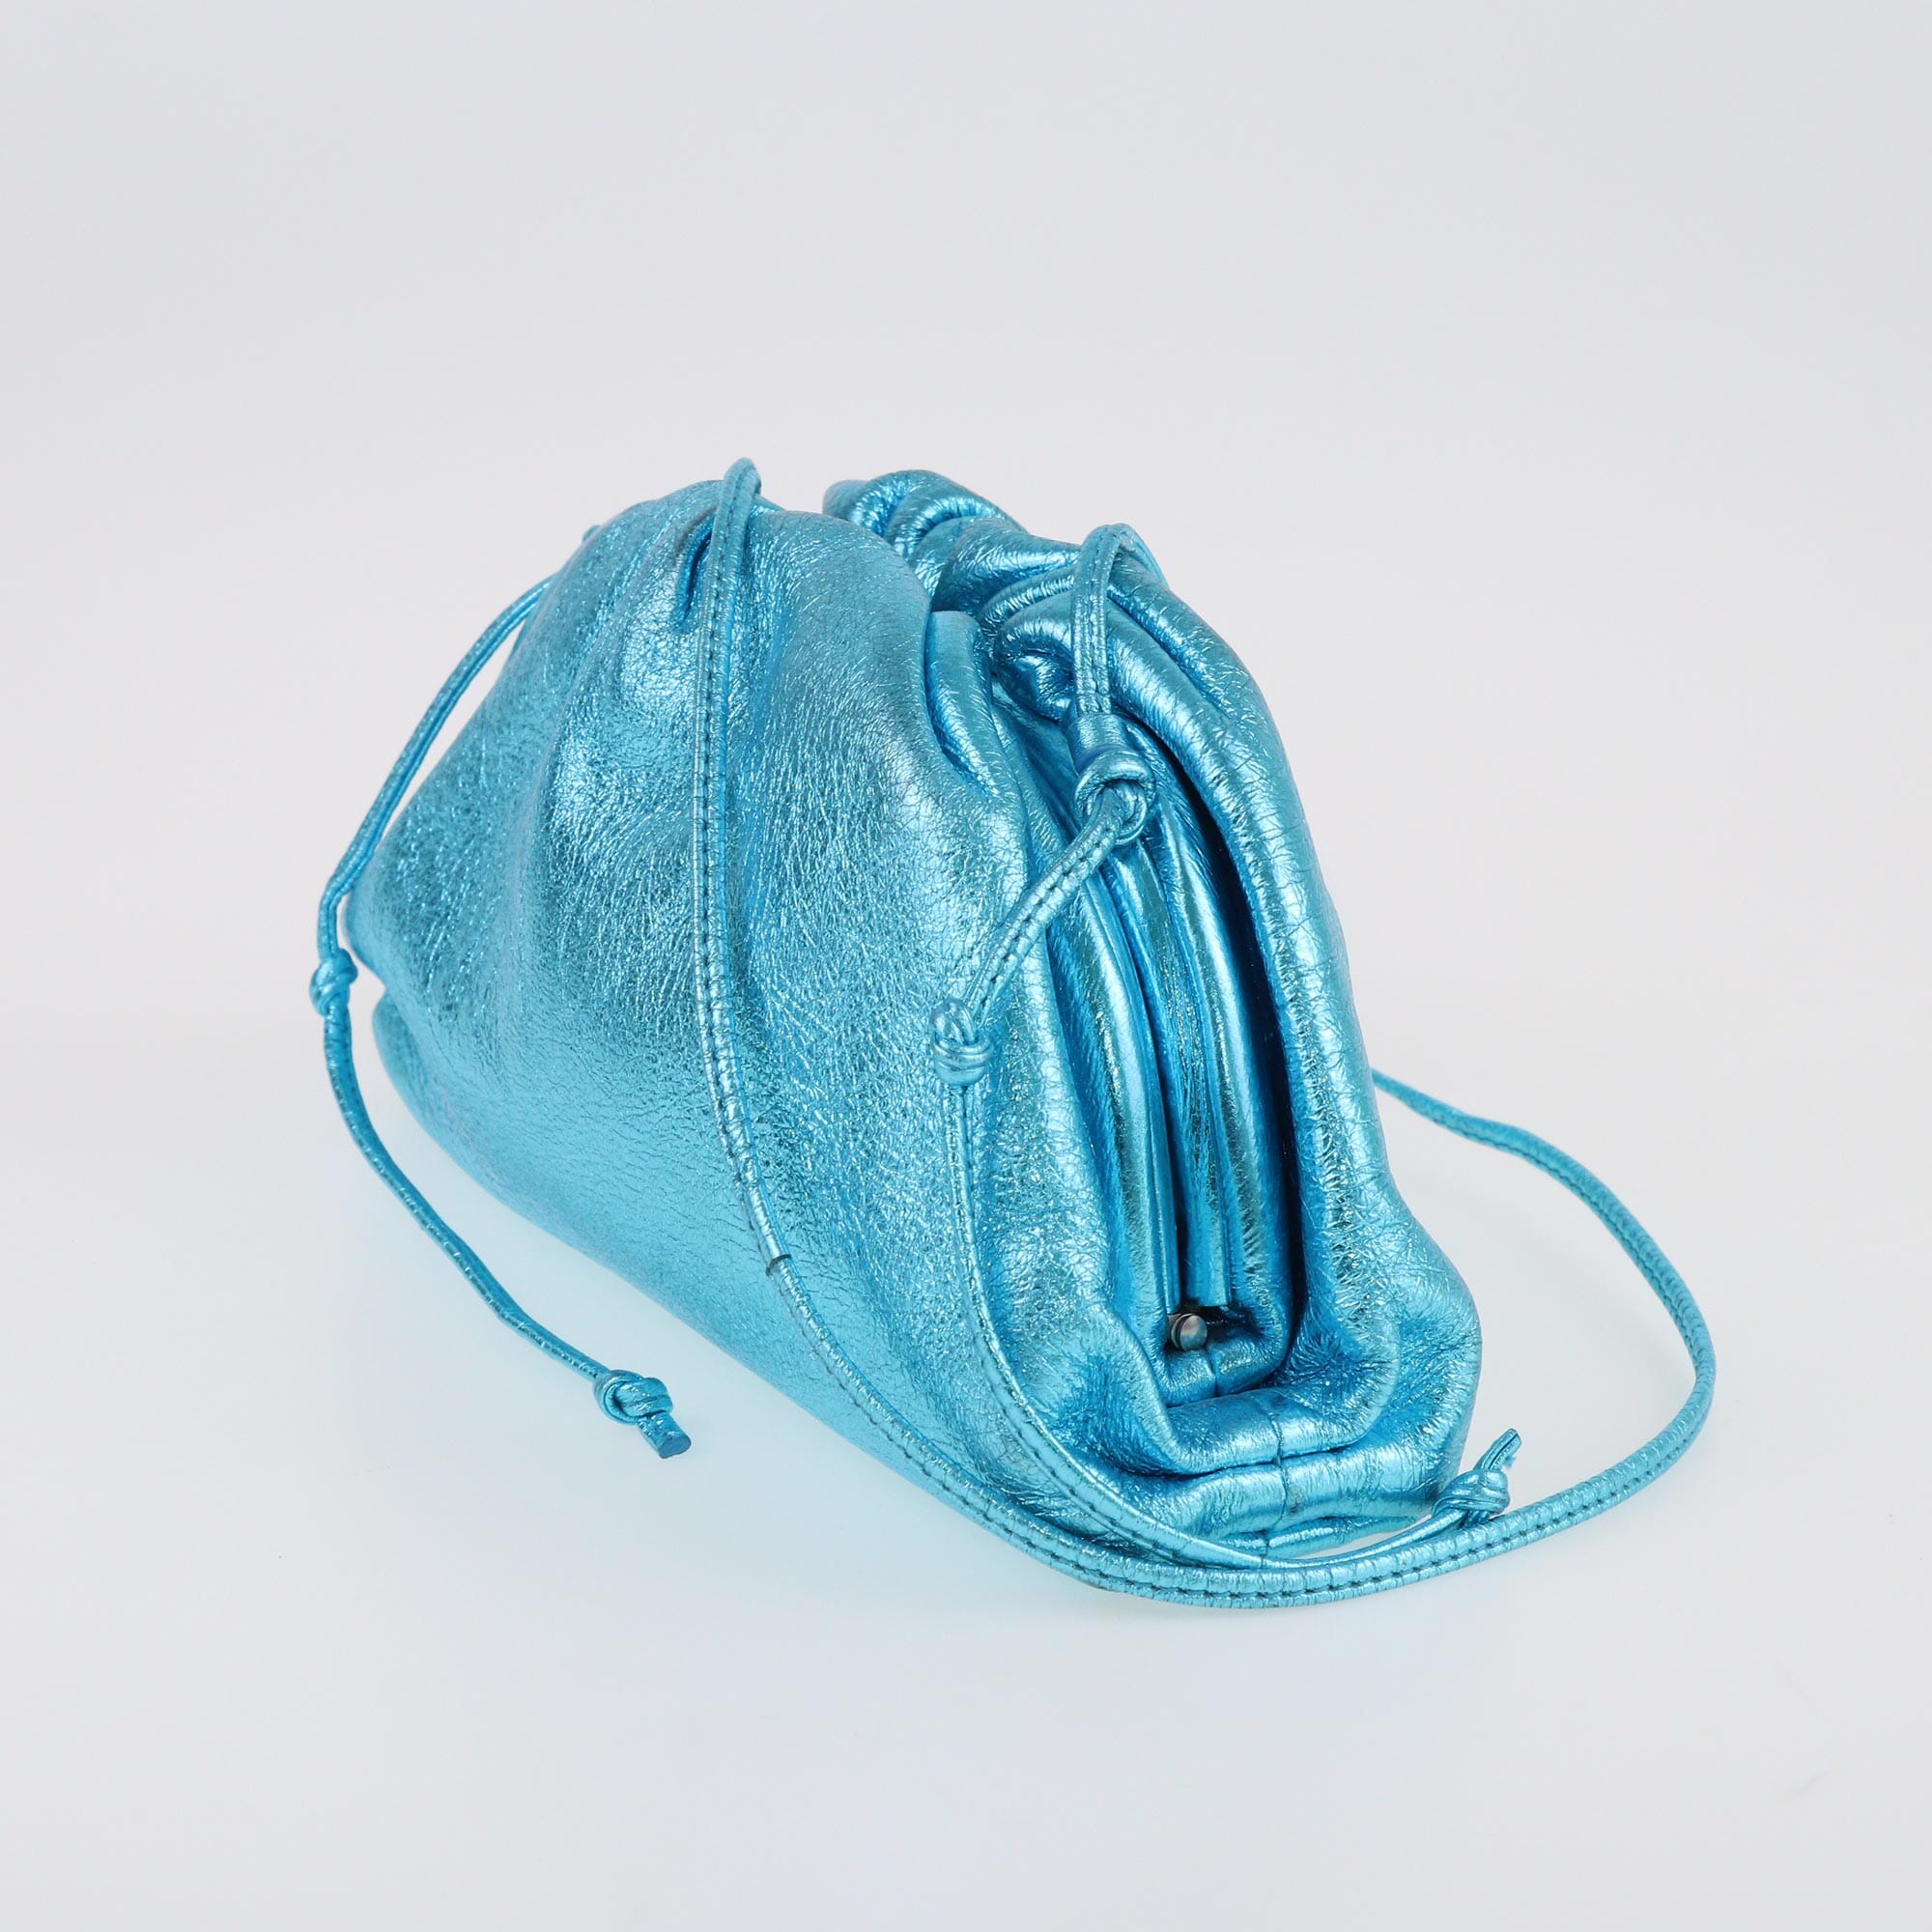 Metallic Turquoise Mini Pouch Clutch Bags Bottega Veneta 